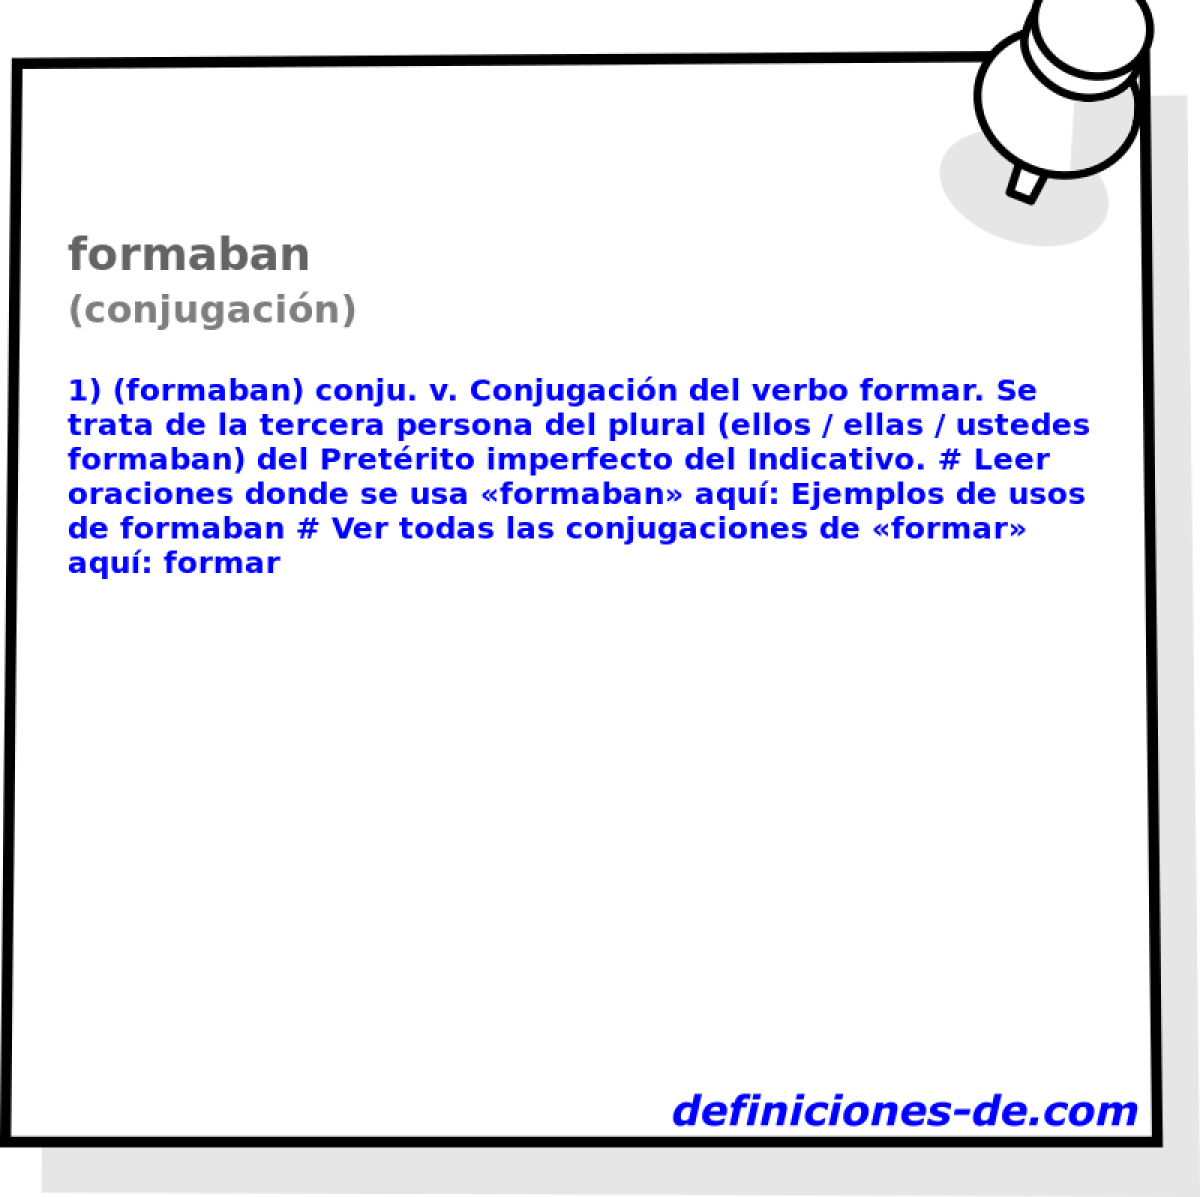 formaban (conjugacin)